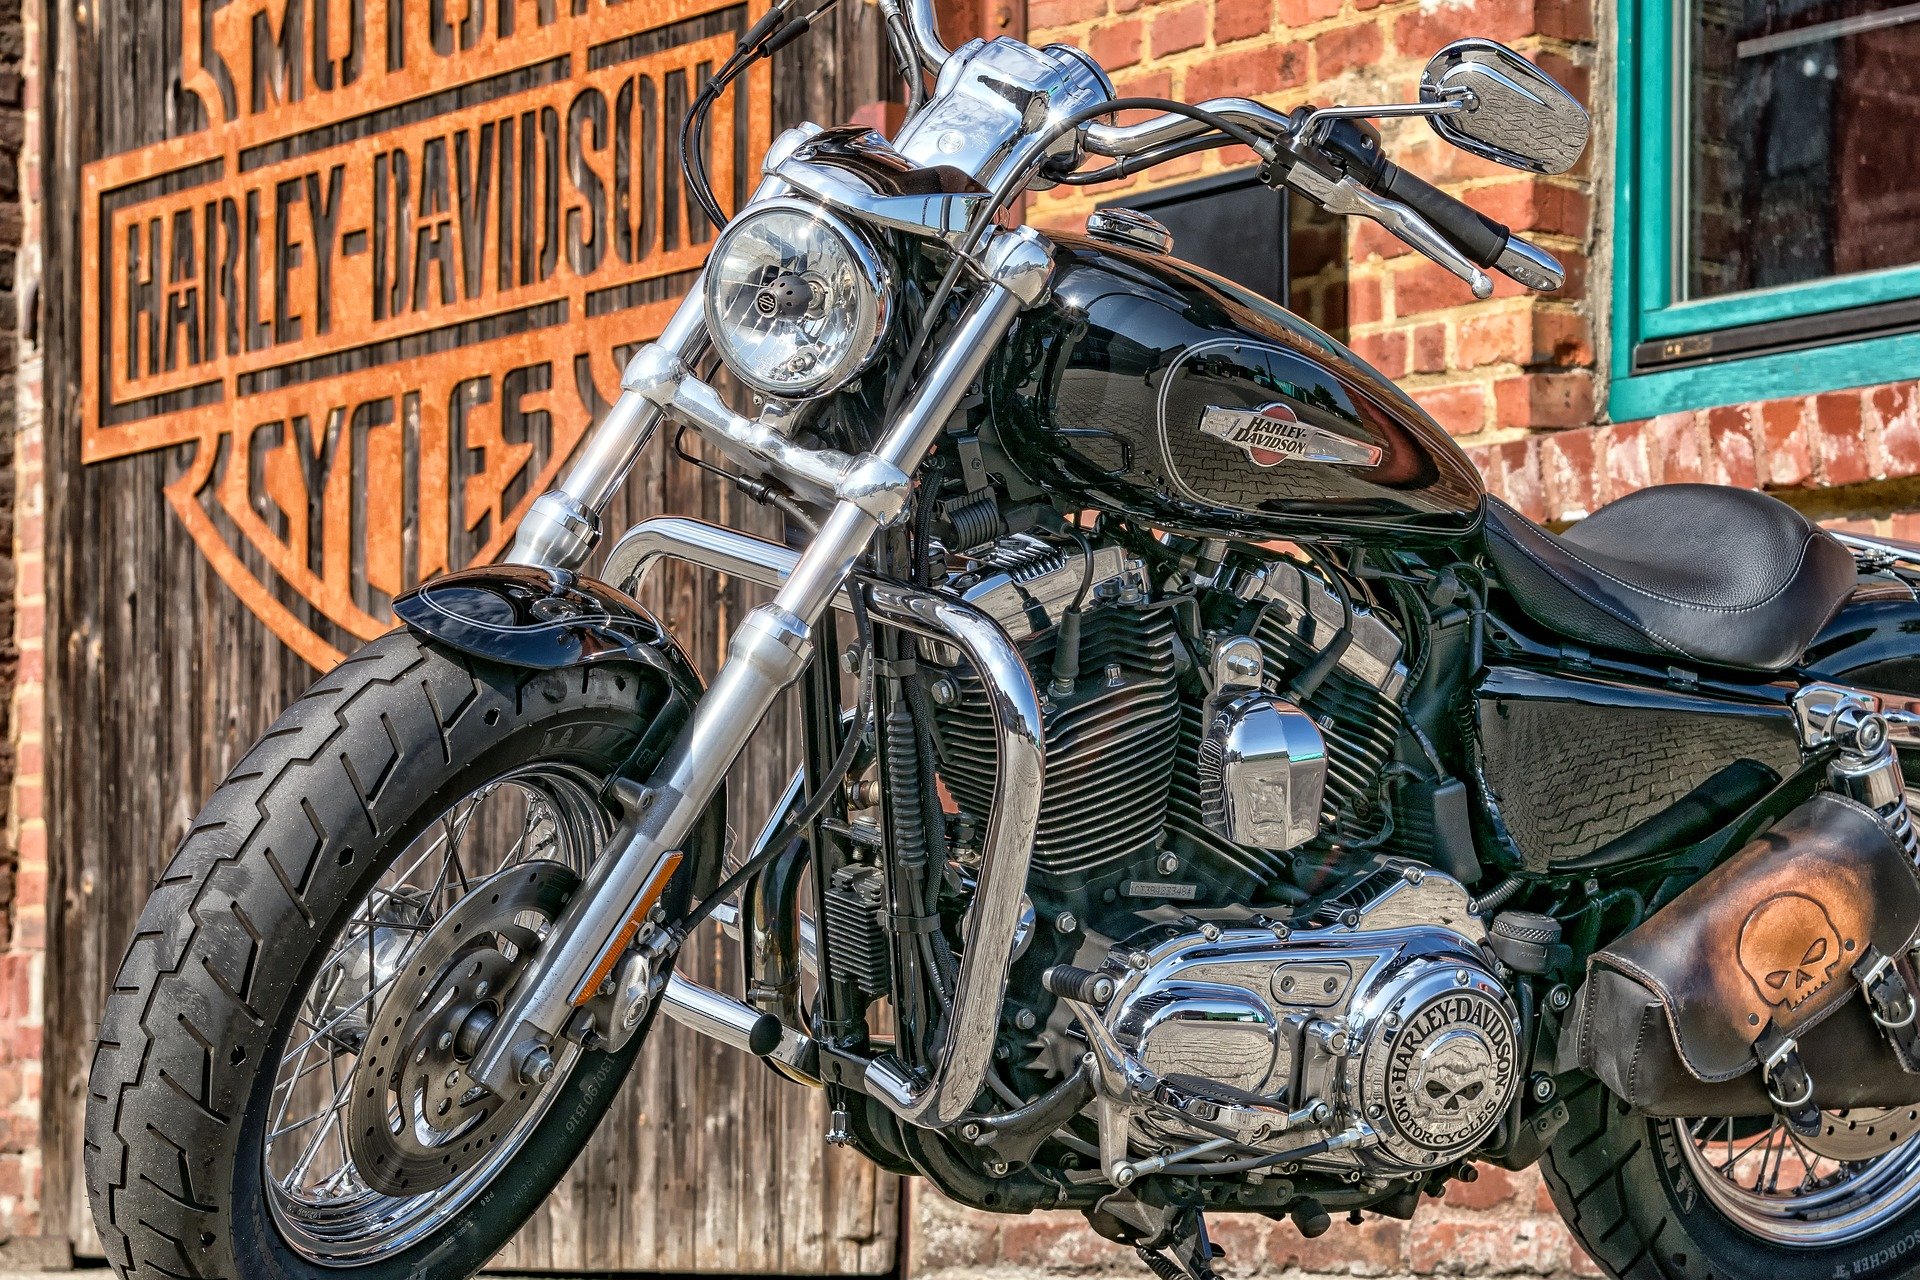 Classic Harley Davidson Motorcycle - VeteranCarDonations.org